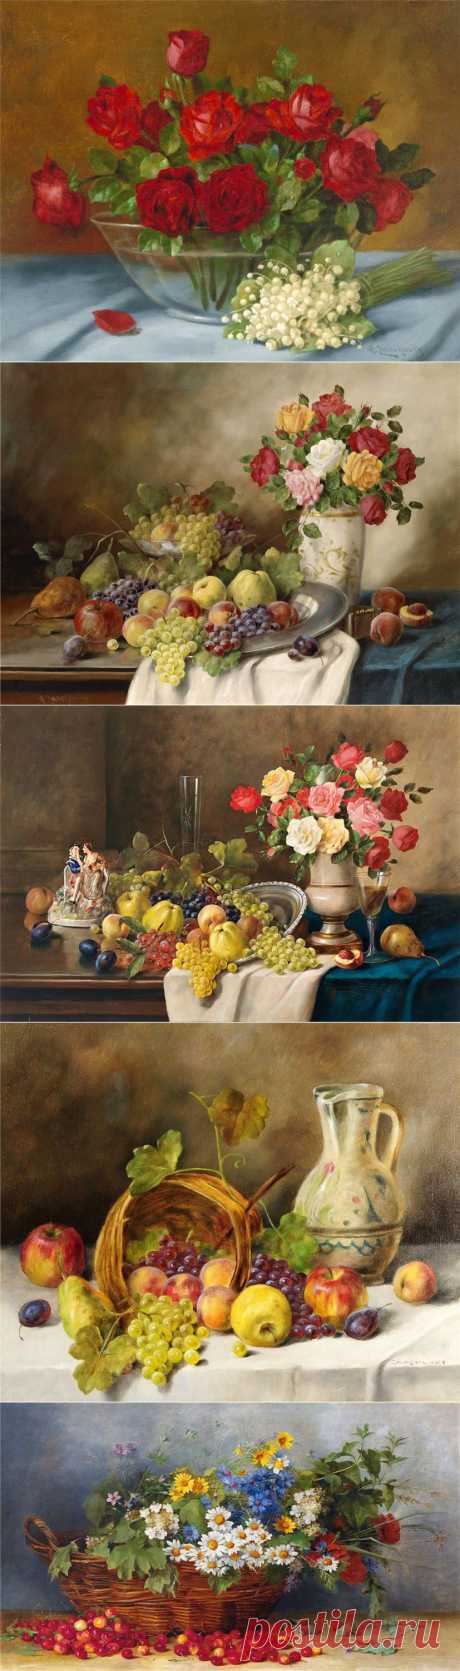 Цветочно-фруктовая живопись Alois Zabehlicky (Austrain, 1883-1962)